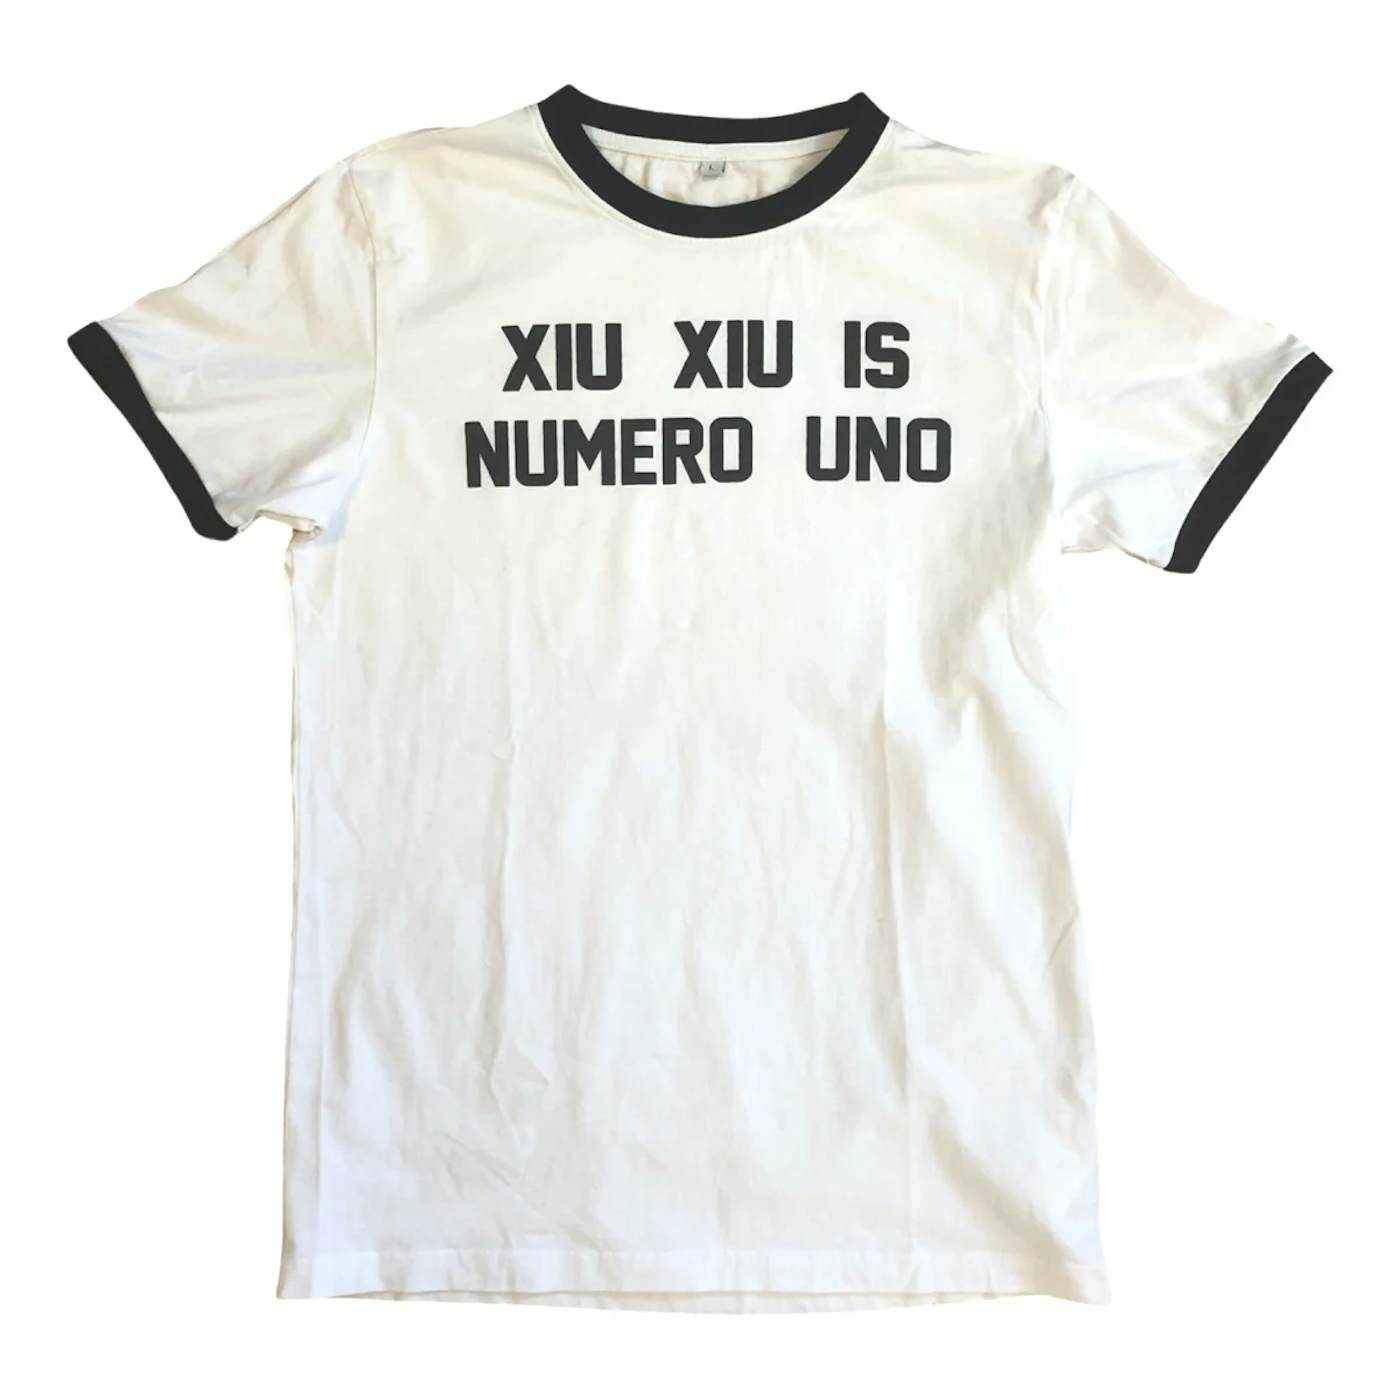 Xiu Xiu Is Numero Uno